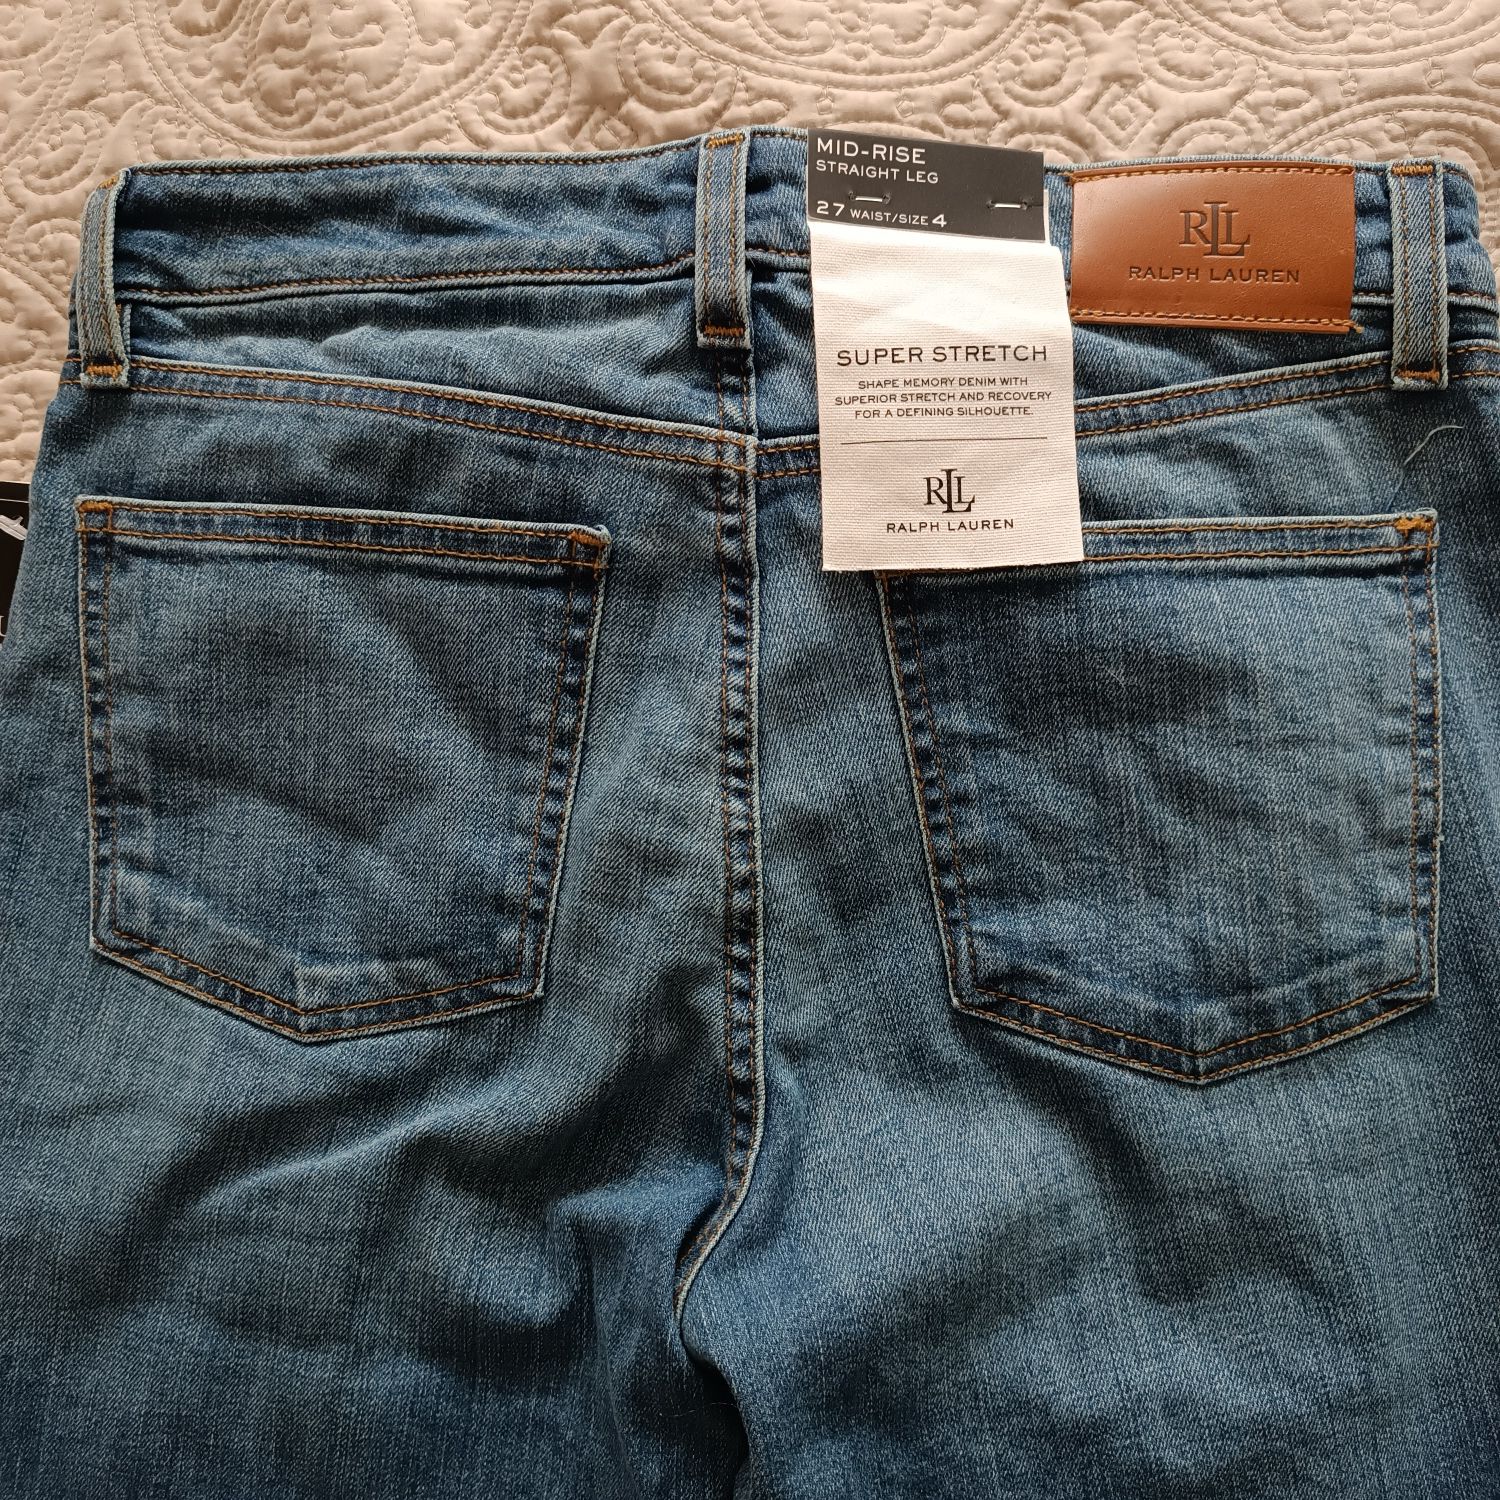 Jeans spodnie damskie Ralph Lauren nowe